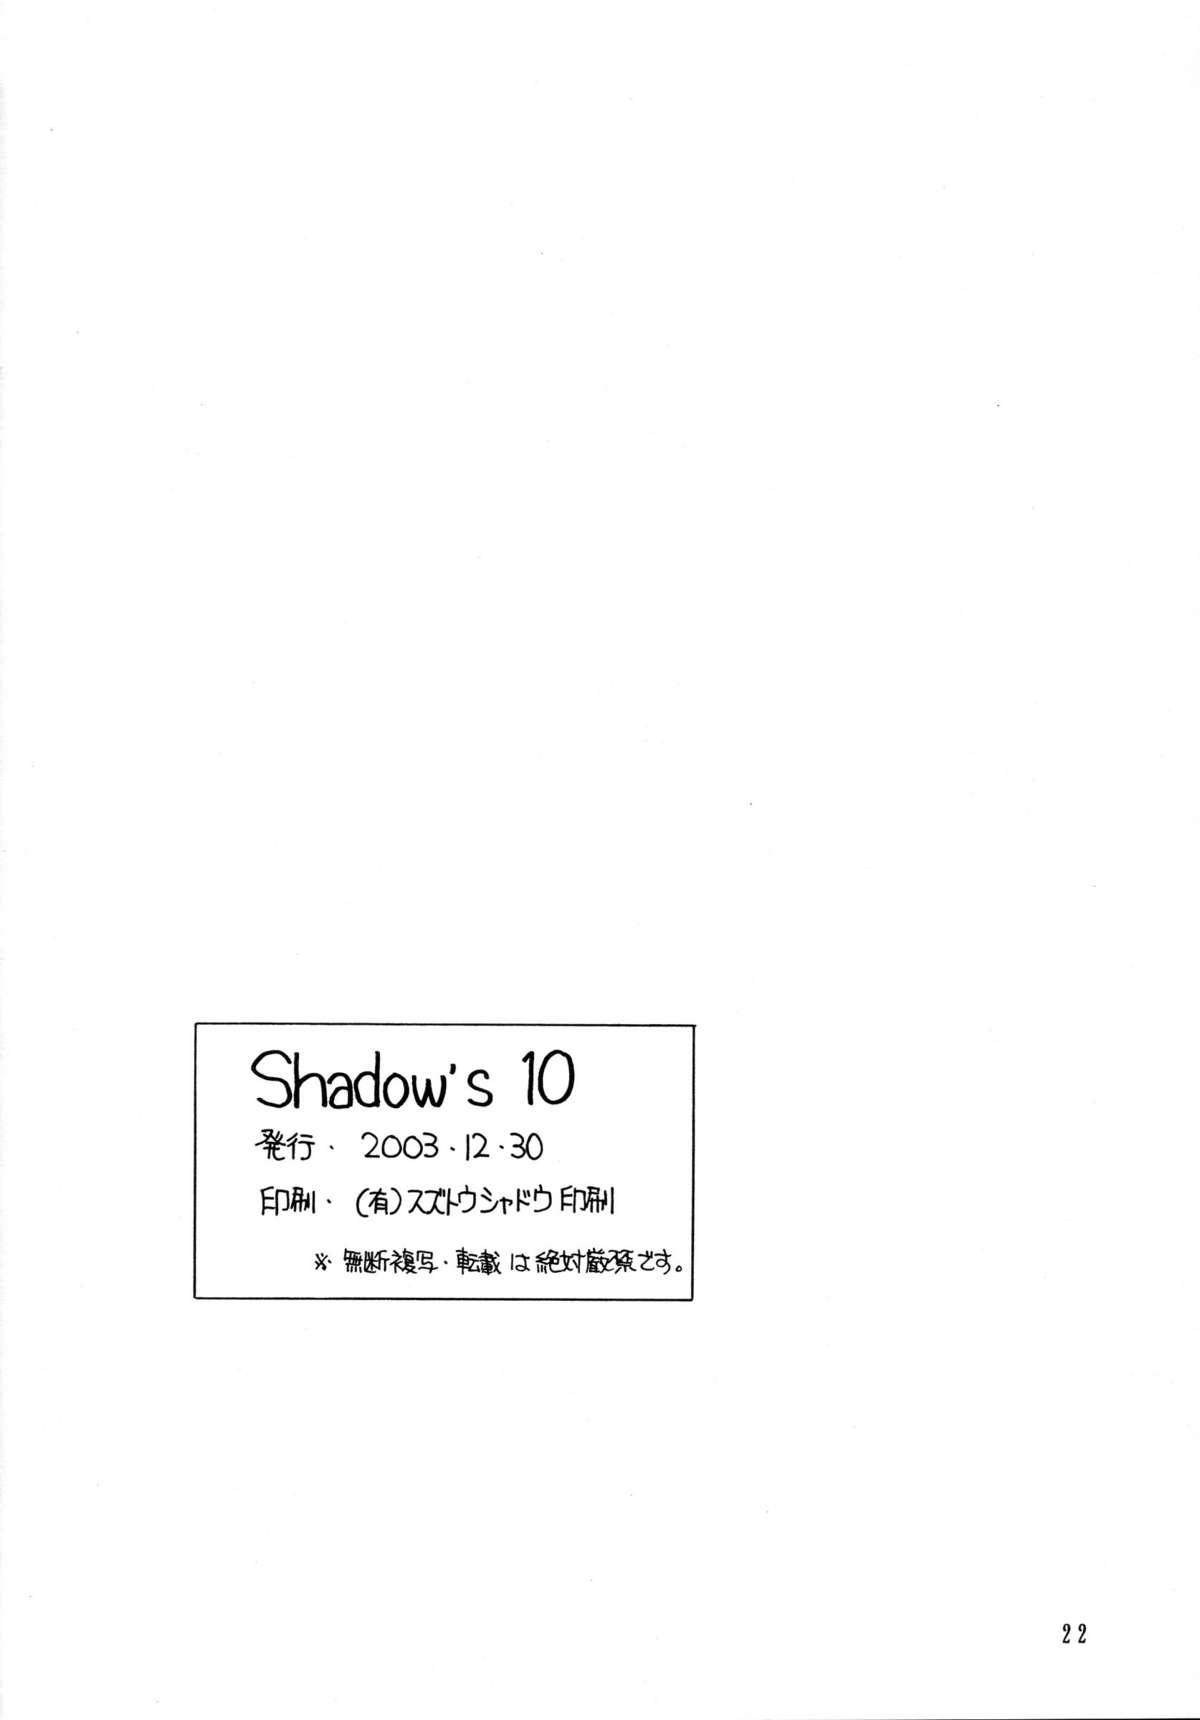 Shadow's 10 20